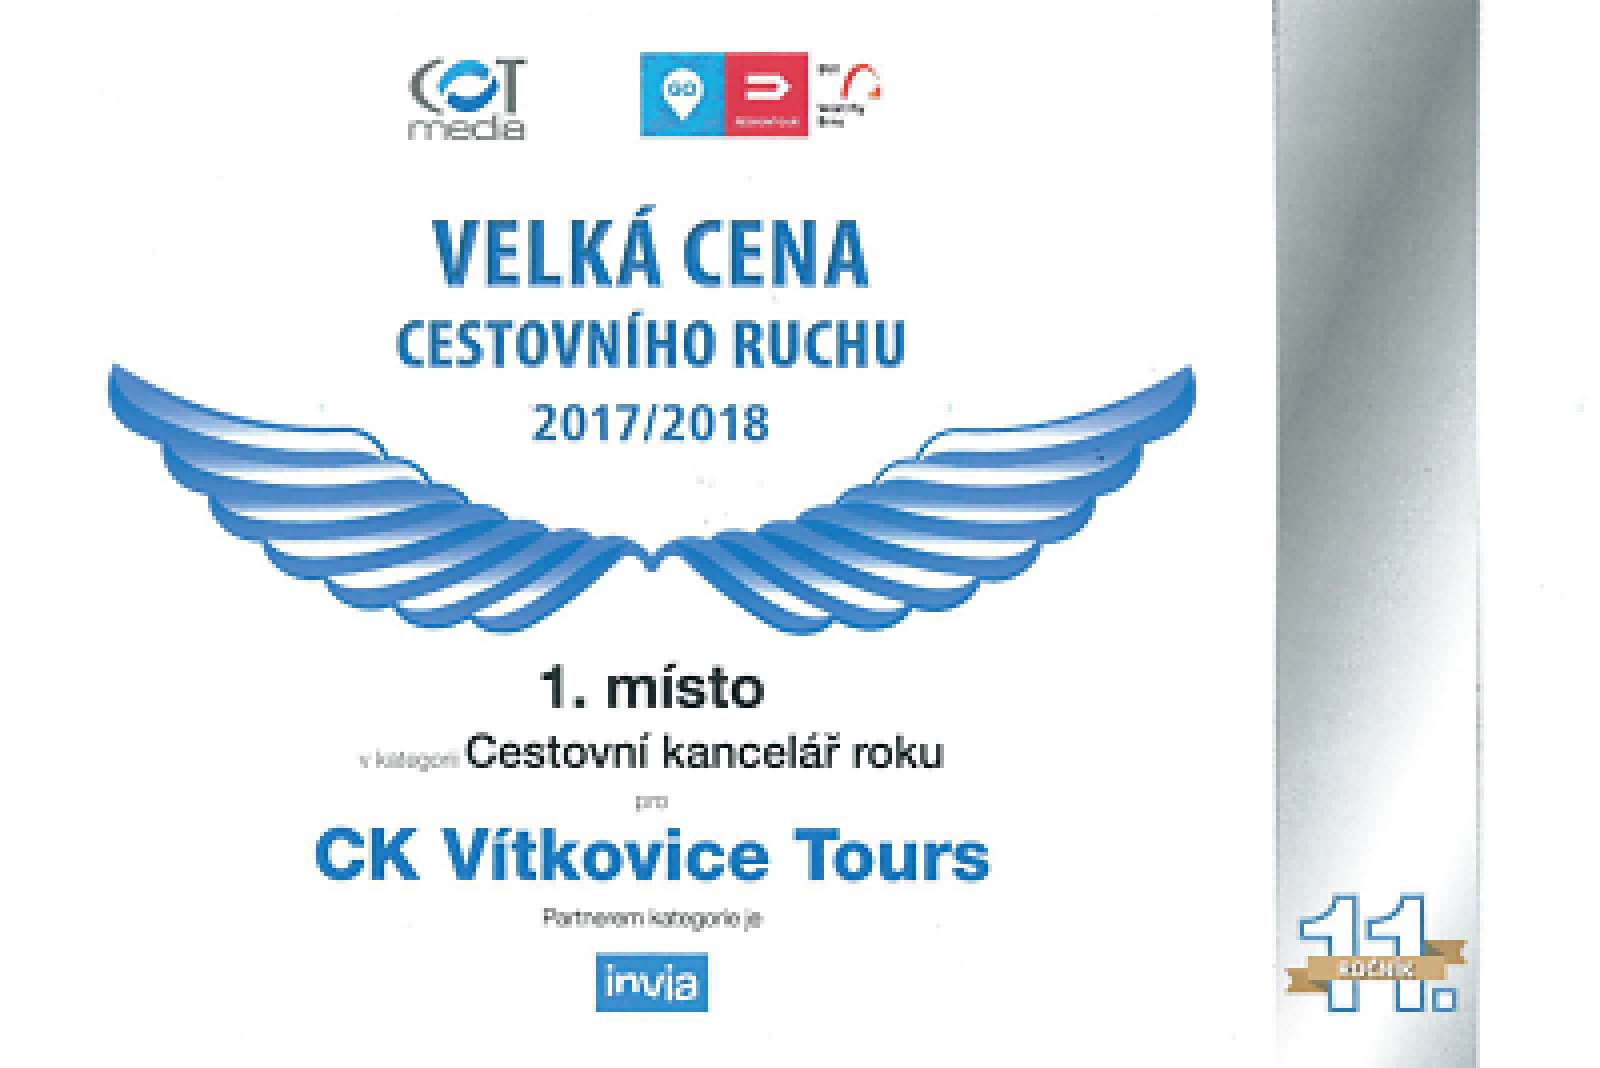 ck vitkovice tours last minute